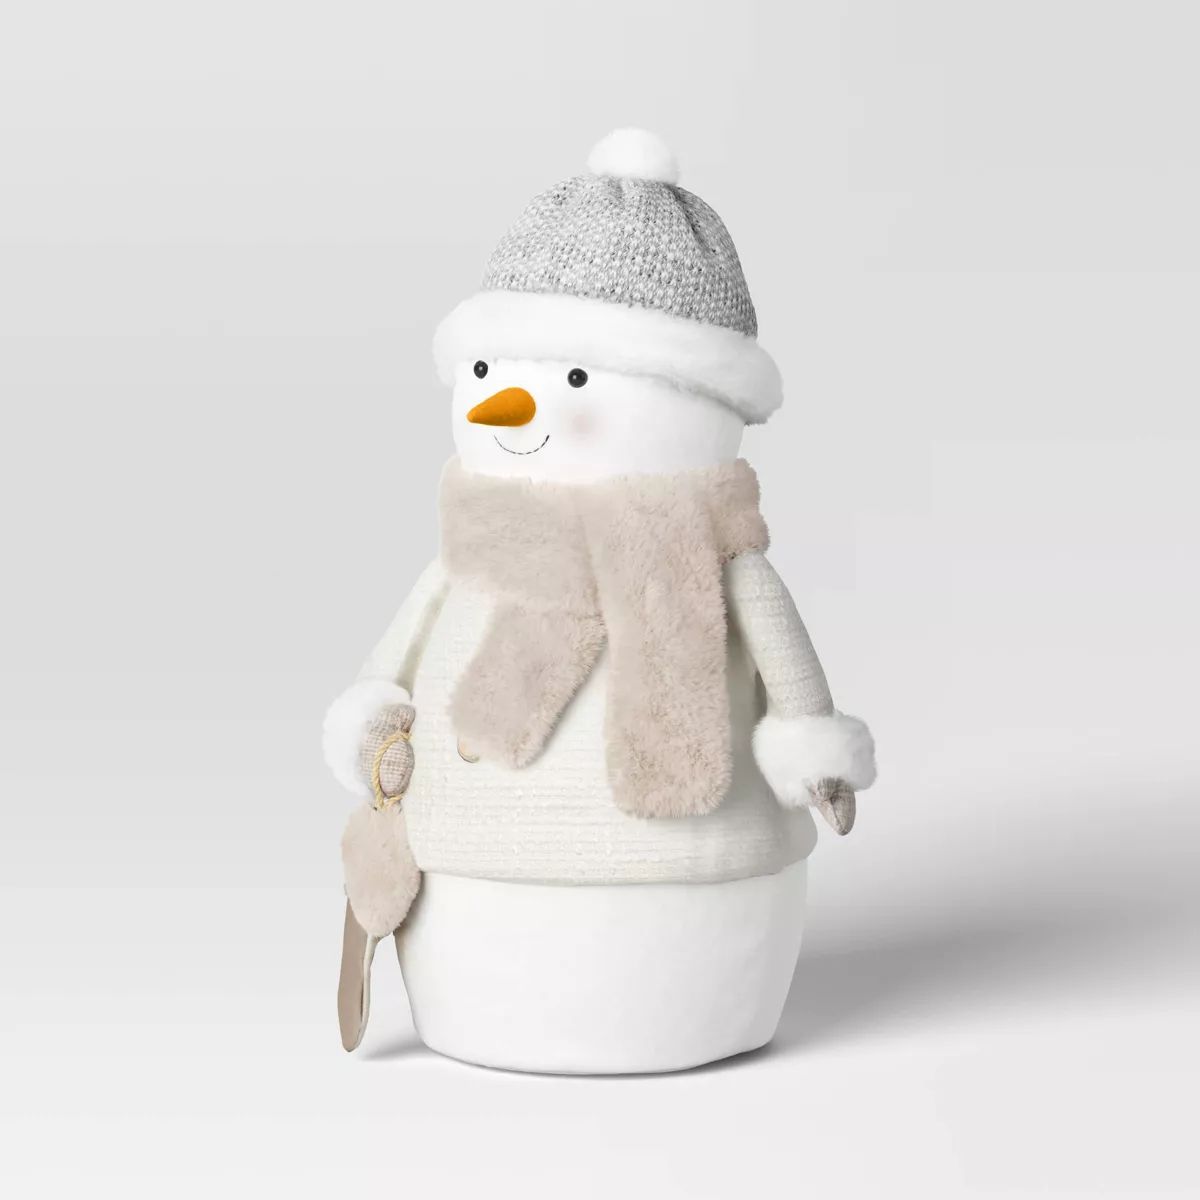 Fabric Snowman Christmas Figurine with Stocking - Wondershop™ White | Target